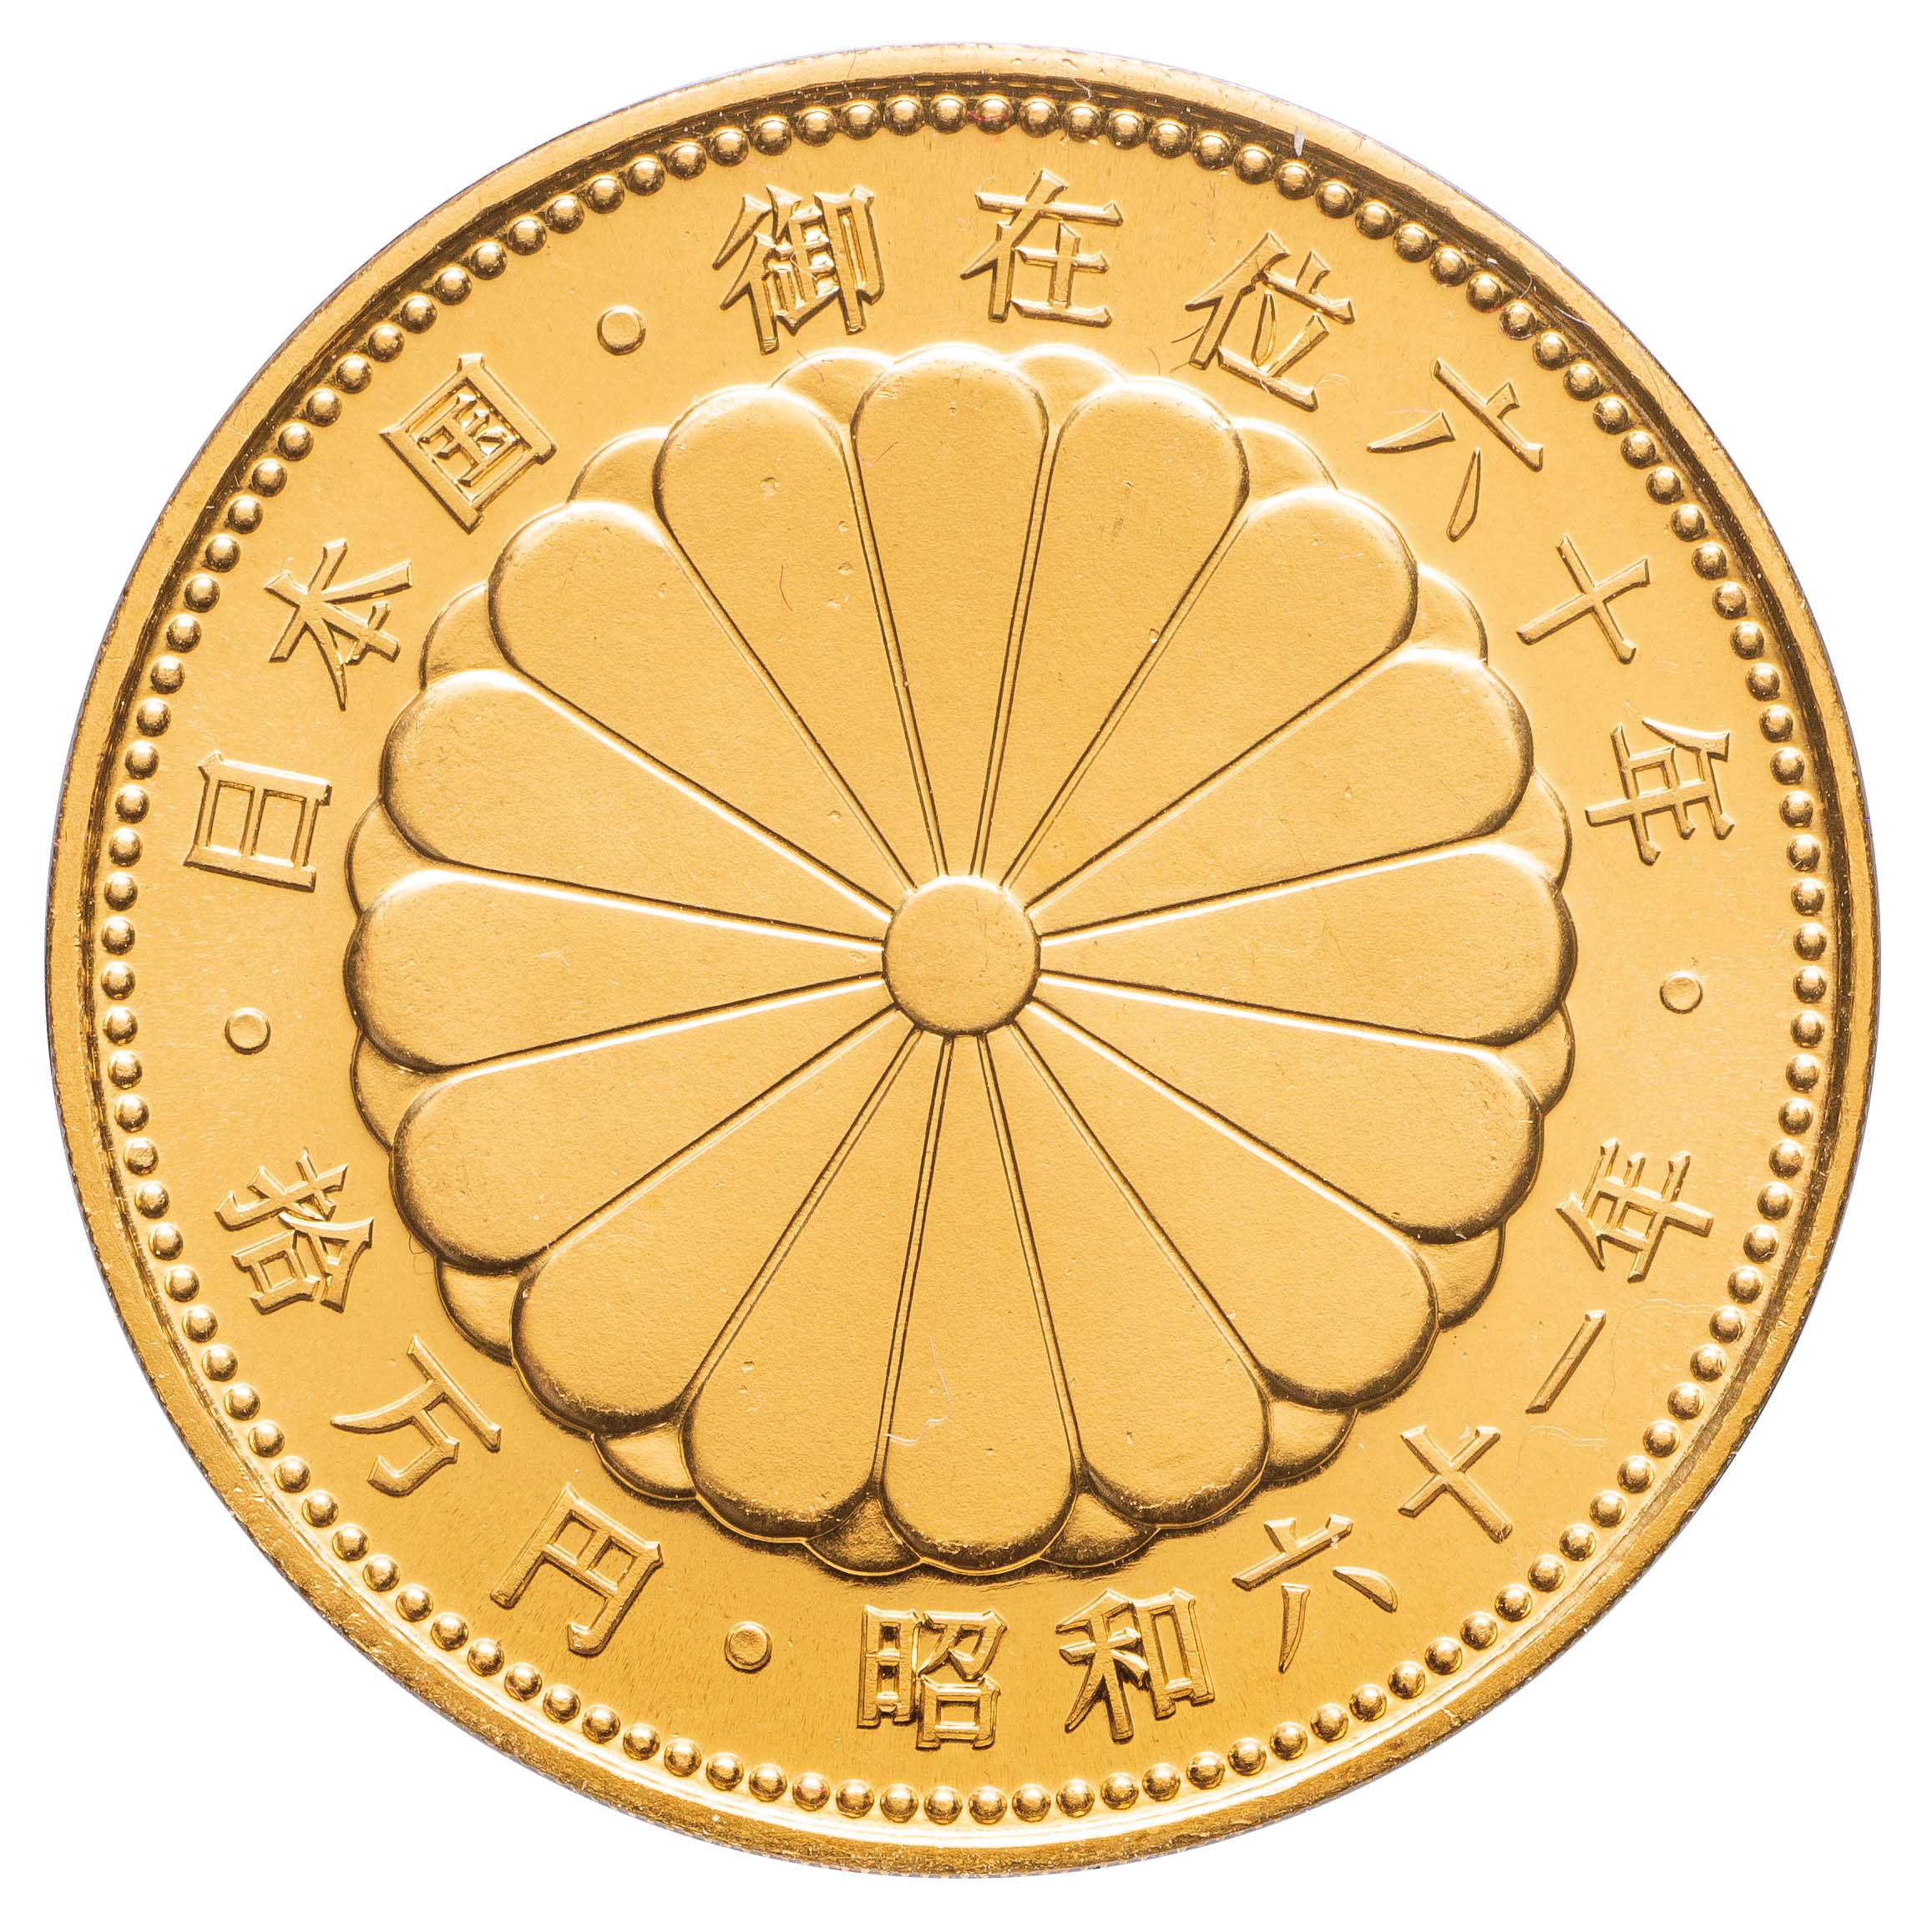 昭和天皇御在位年記念金貨単品   東京書芸館公式通販ウェブサイト